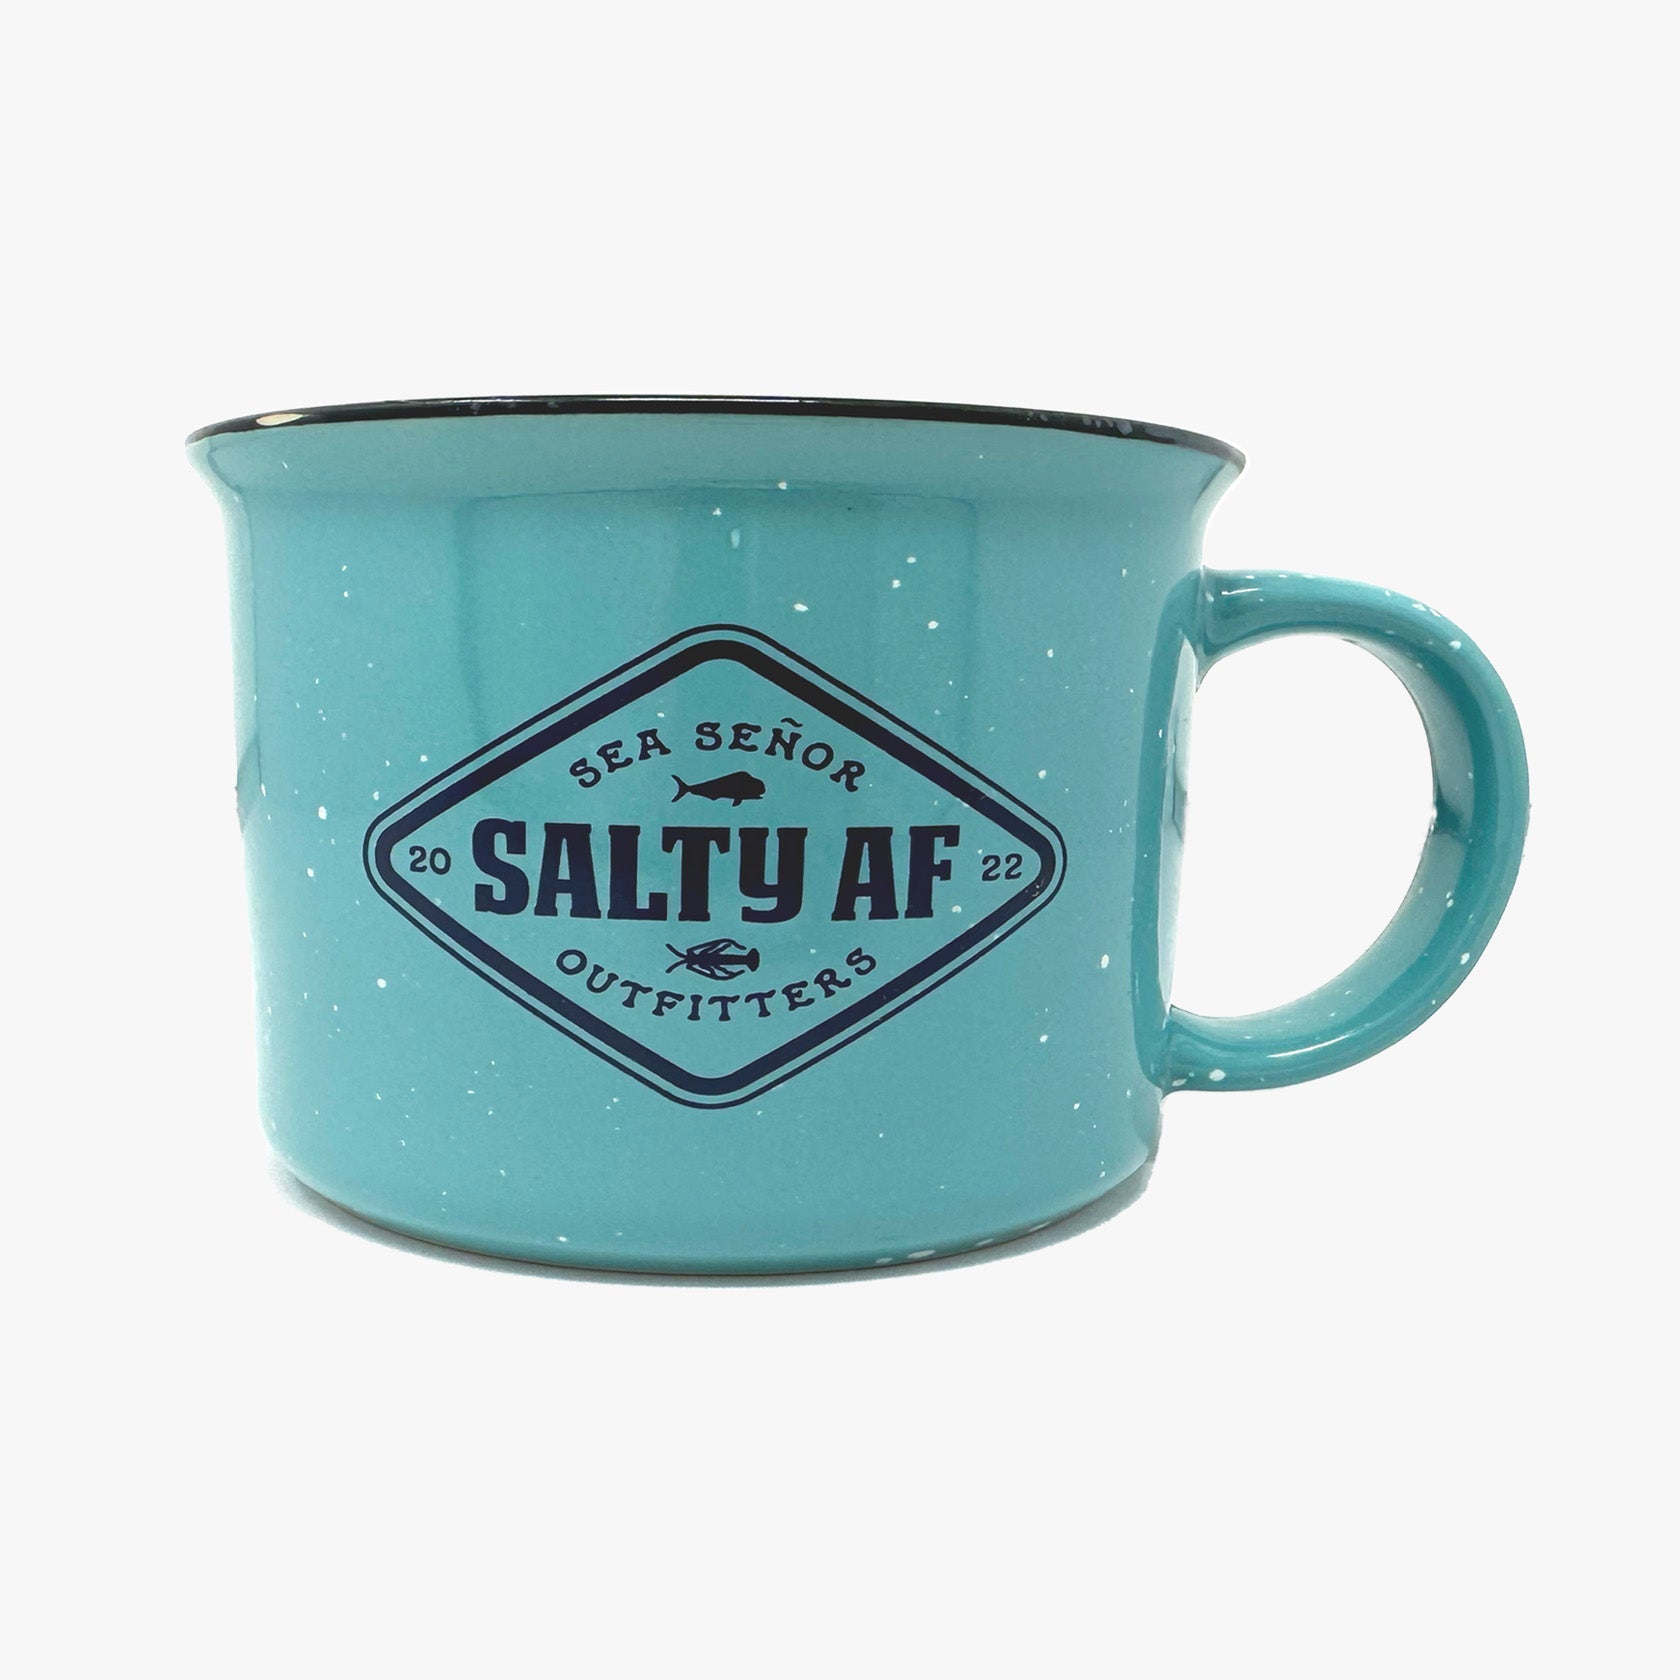 Salt AF Mug - 15 oz - Sea Señor Outfitters